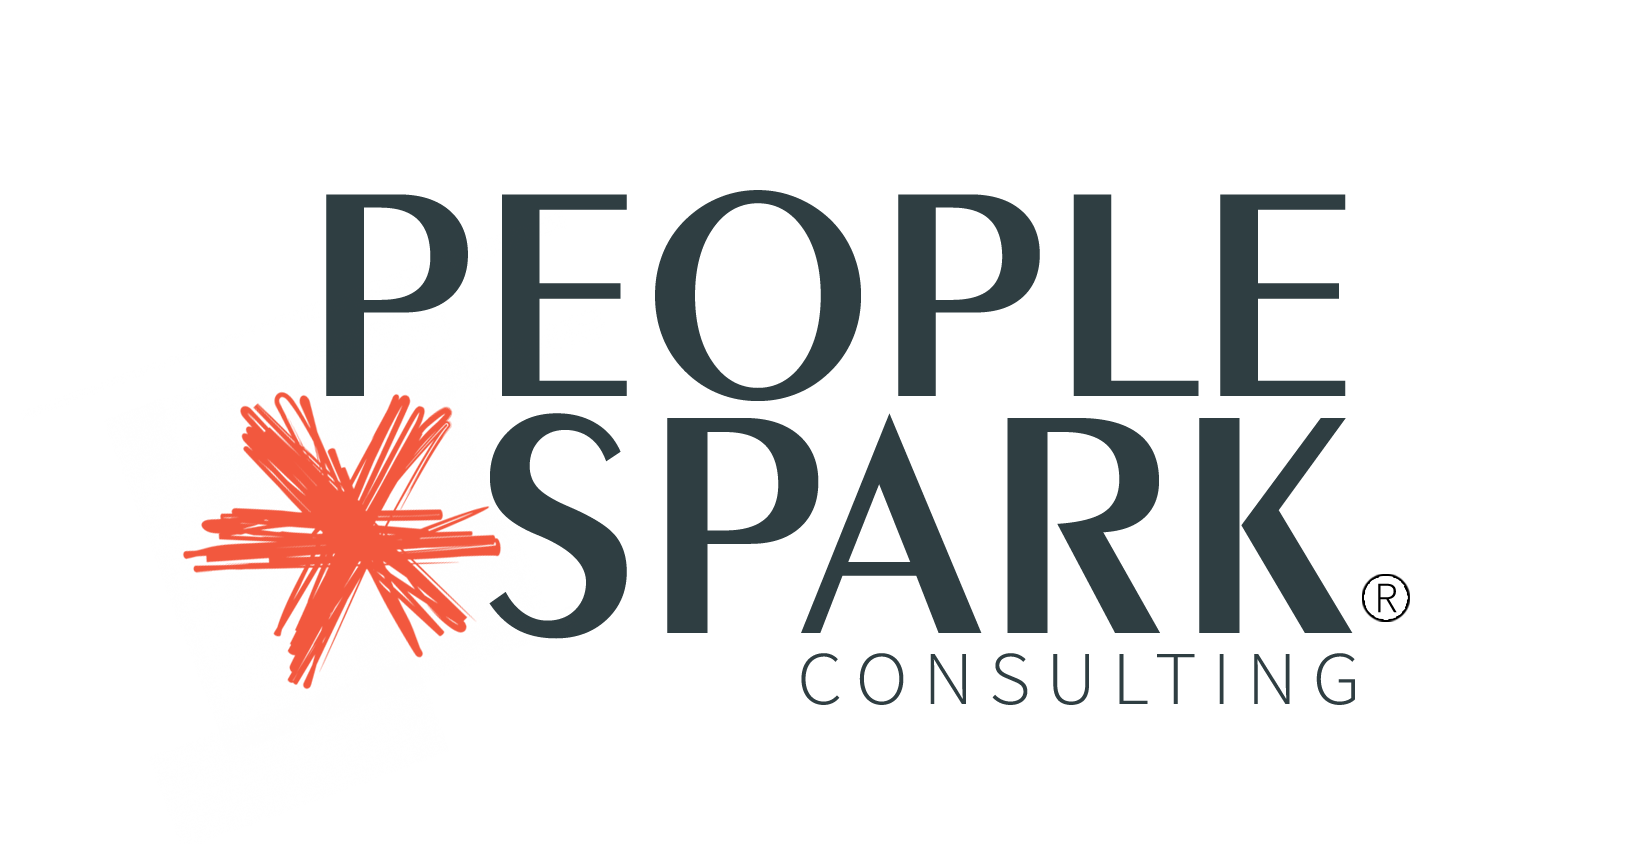 People Spark